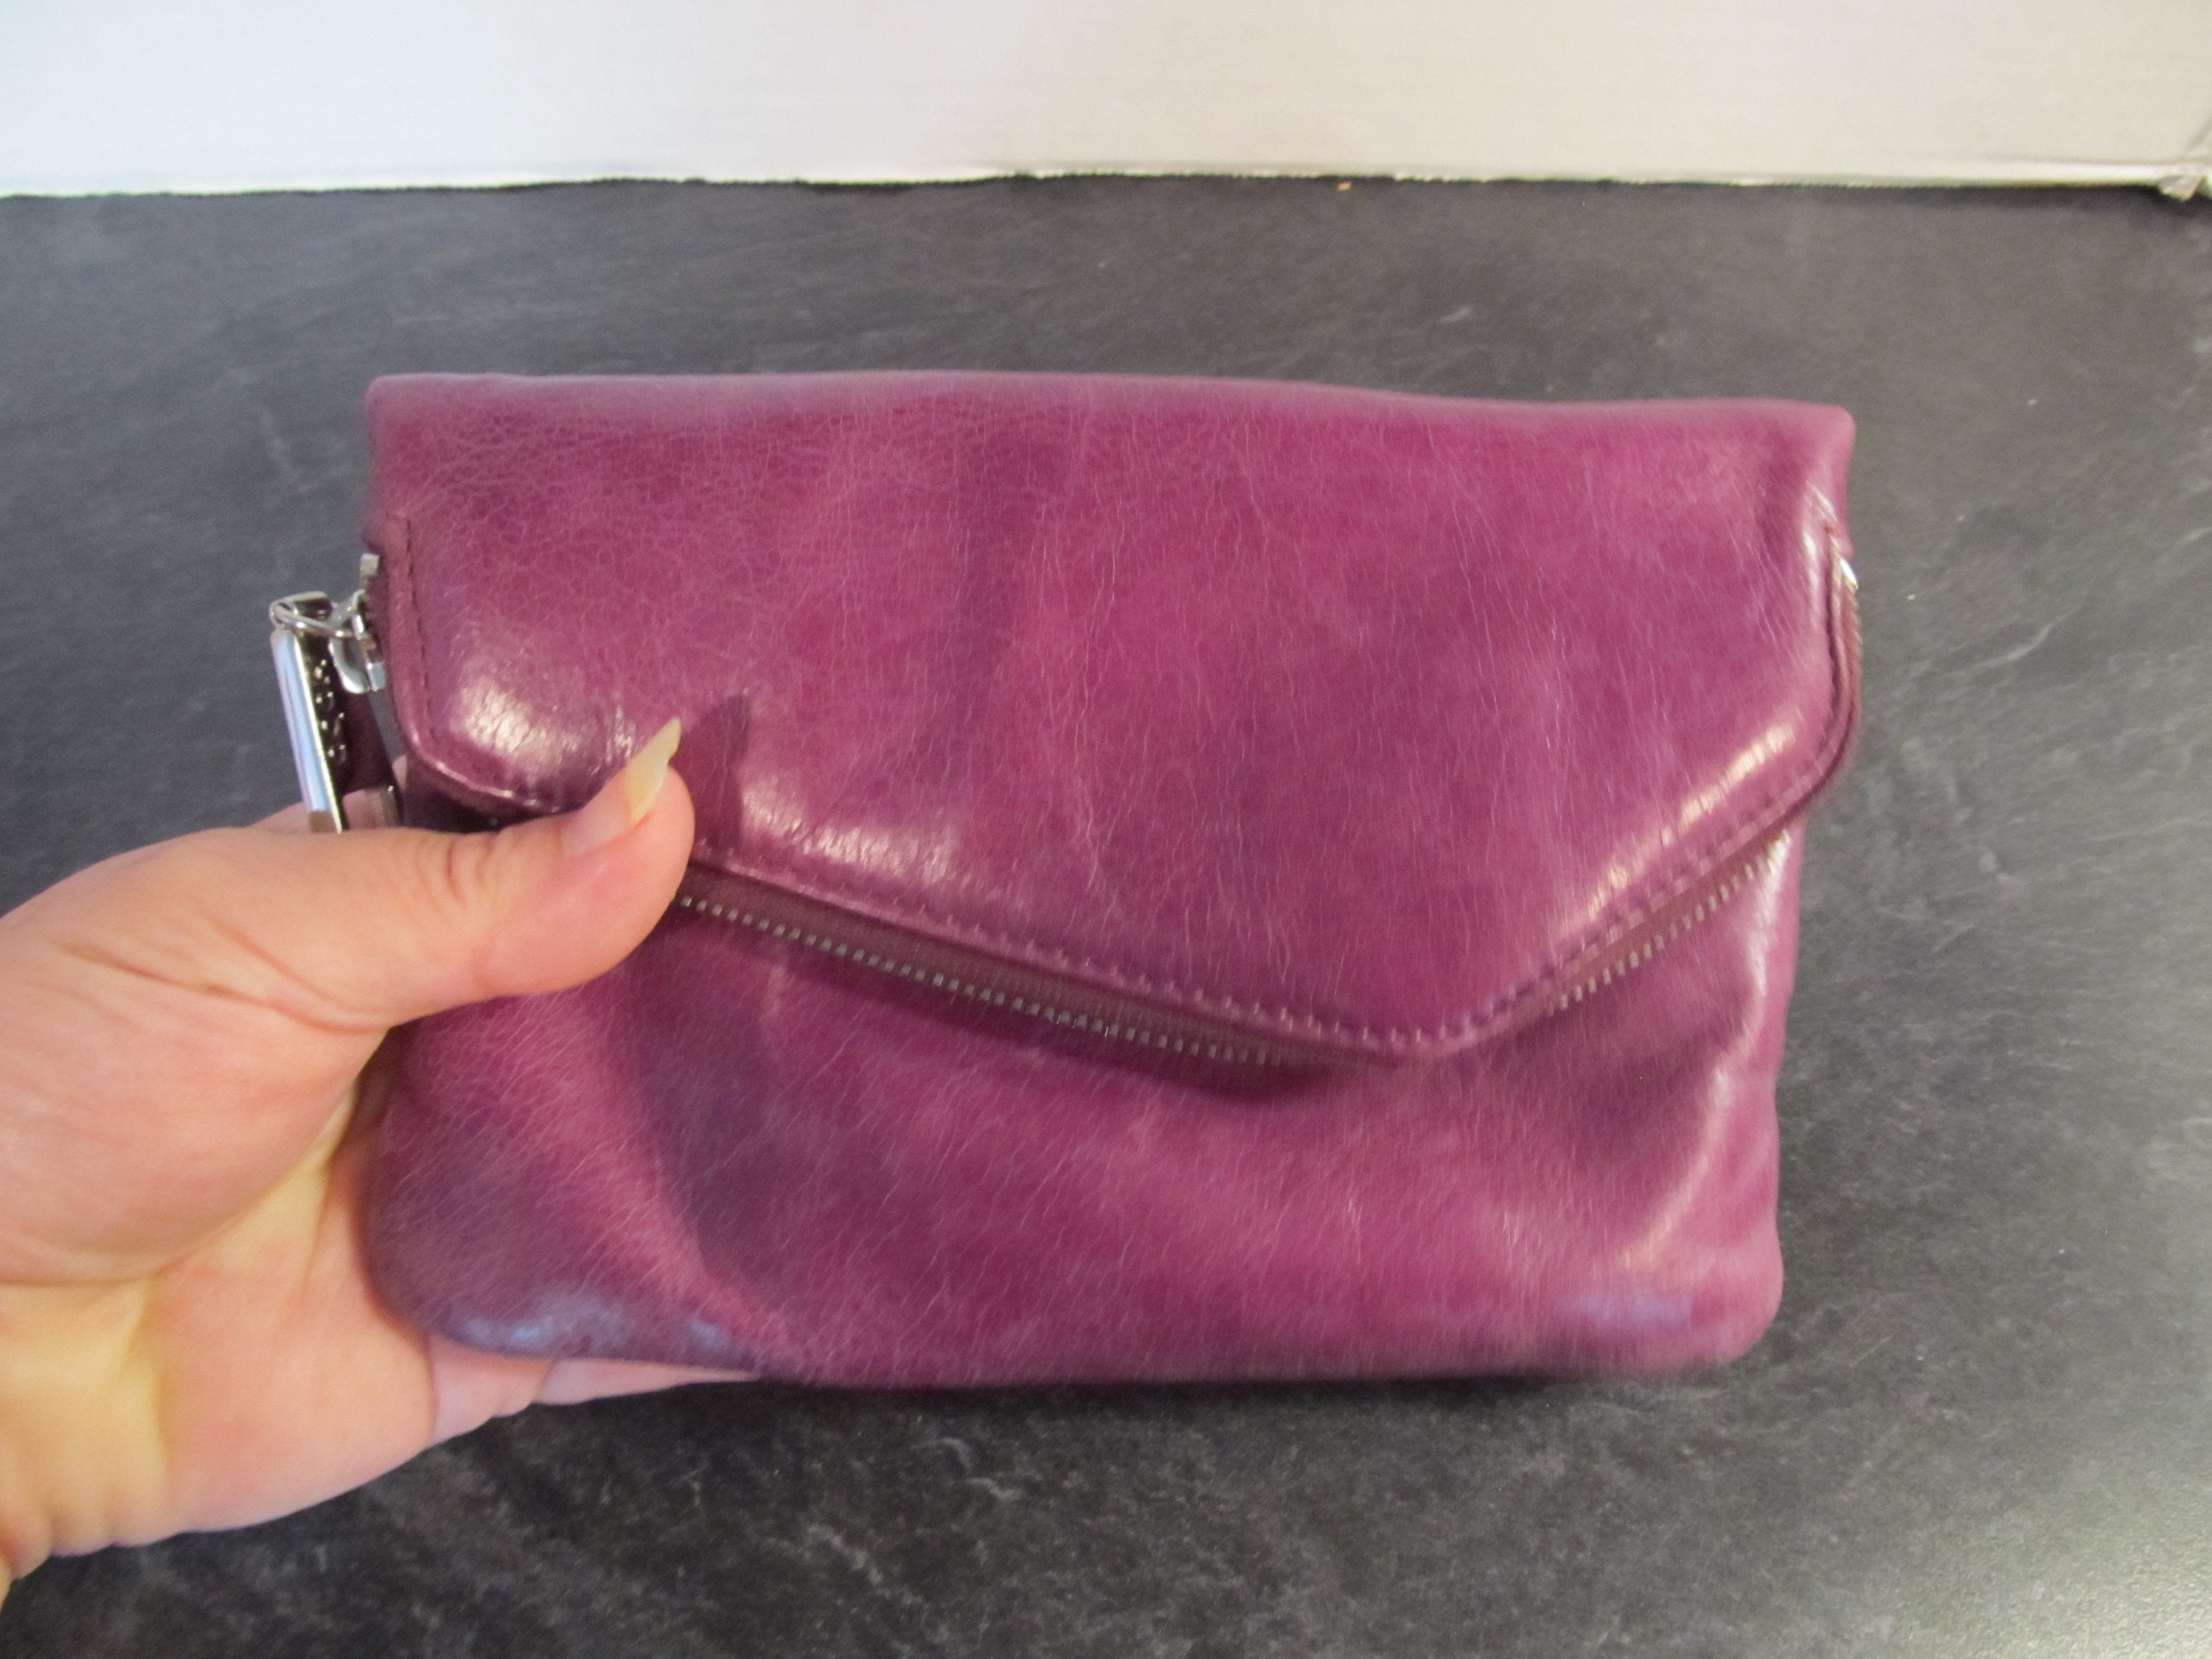 Buy MKF Collection Shoulder Bag for Women, Wristlet Wallet Purse Top-Handle  Hobo Bag at Amazon.in